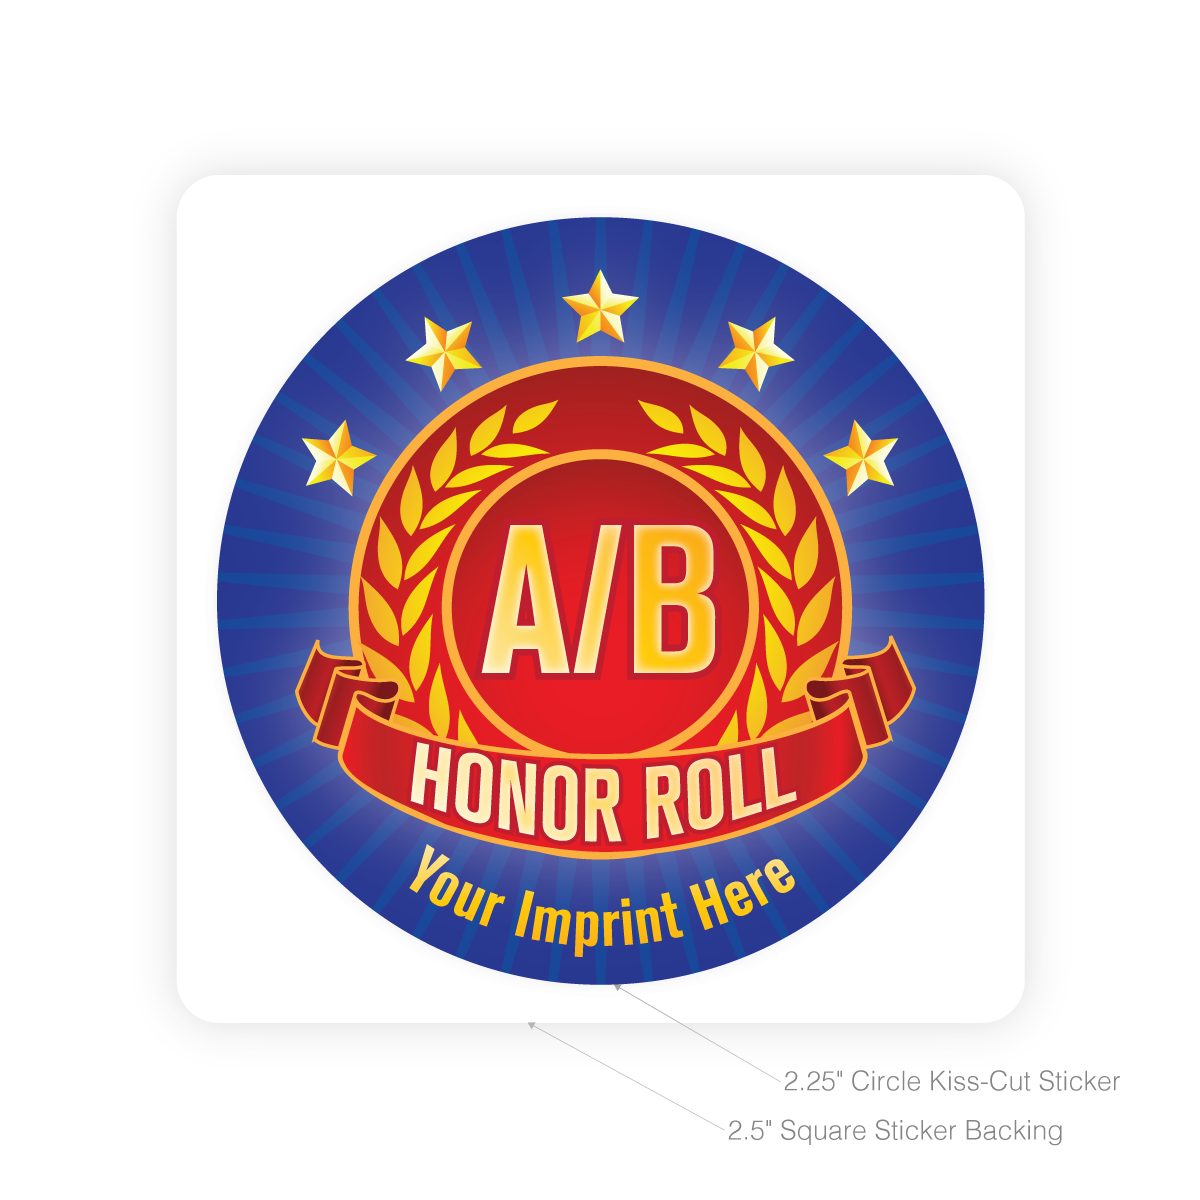 Custom Round Sticker - A/B Honor Roll